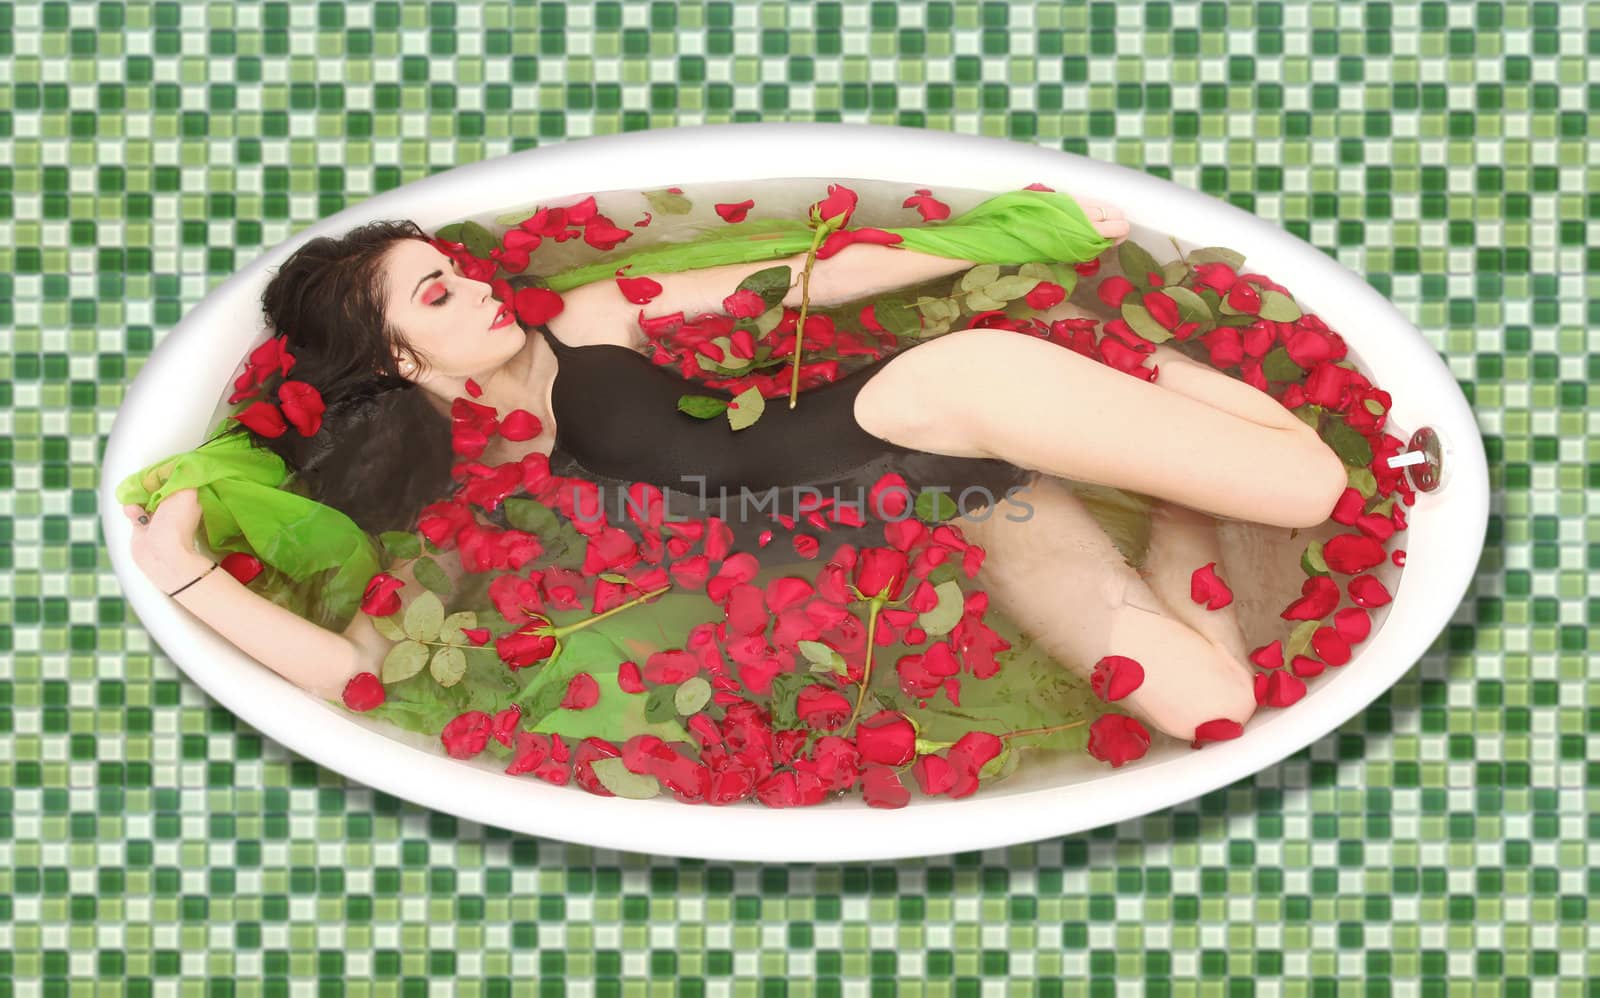 Woman in a Bath Tub Full of Flowers by tobkatrina